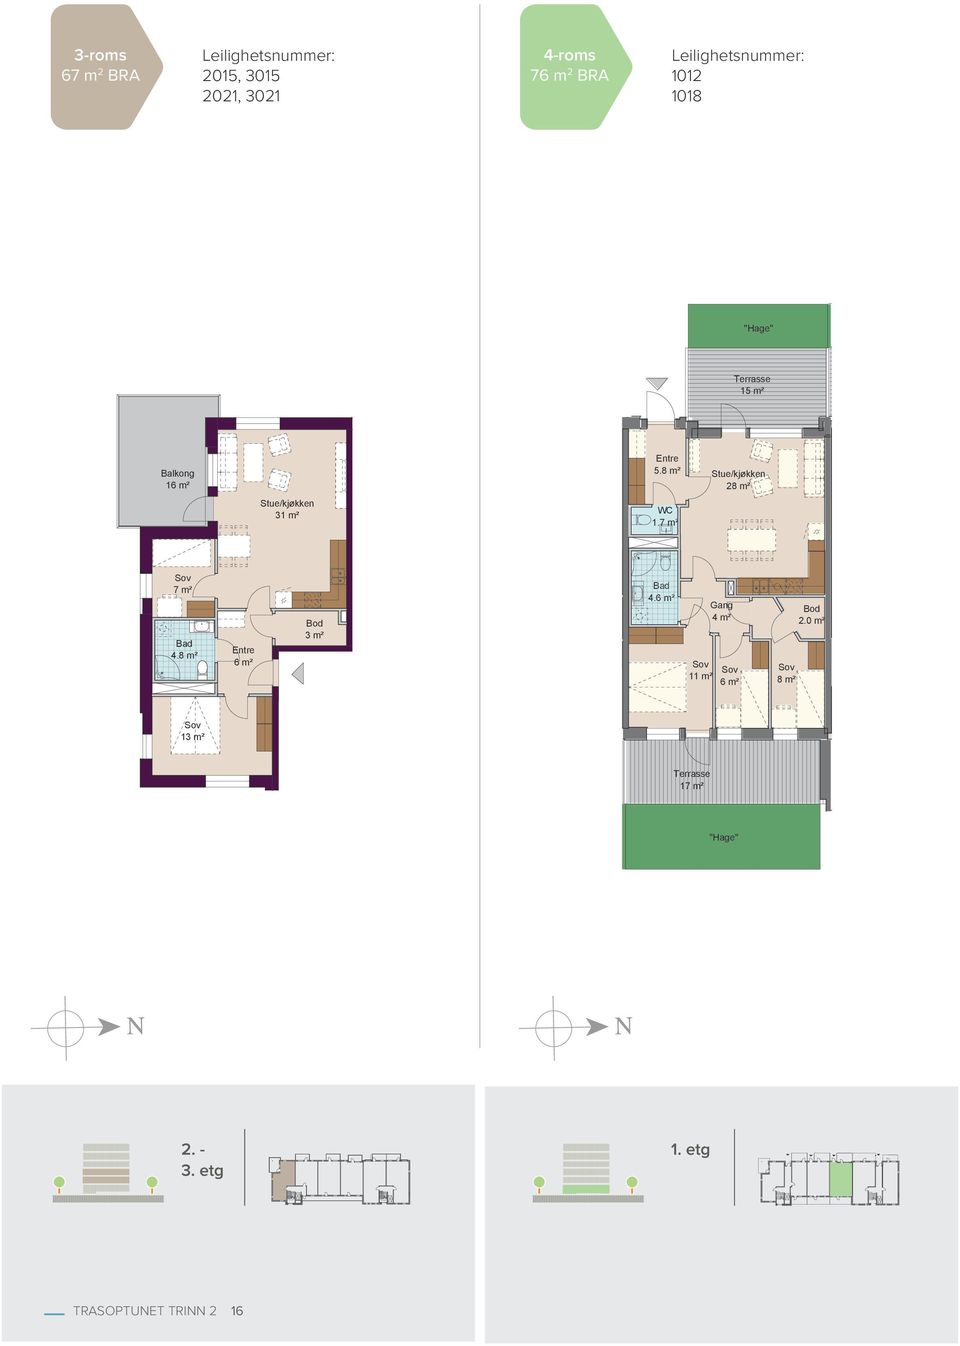 8 m² Stue/kjøkken 28 m² Stue/kjøkken 31 m² WC 1.7 m² 7 m² Bad 4.